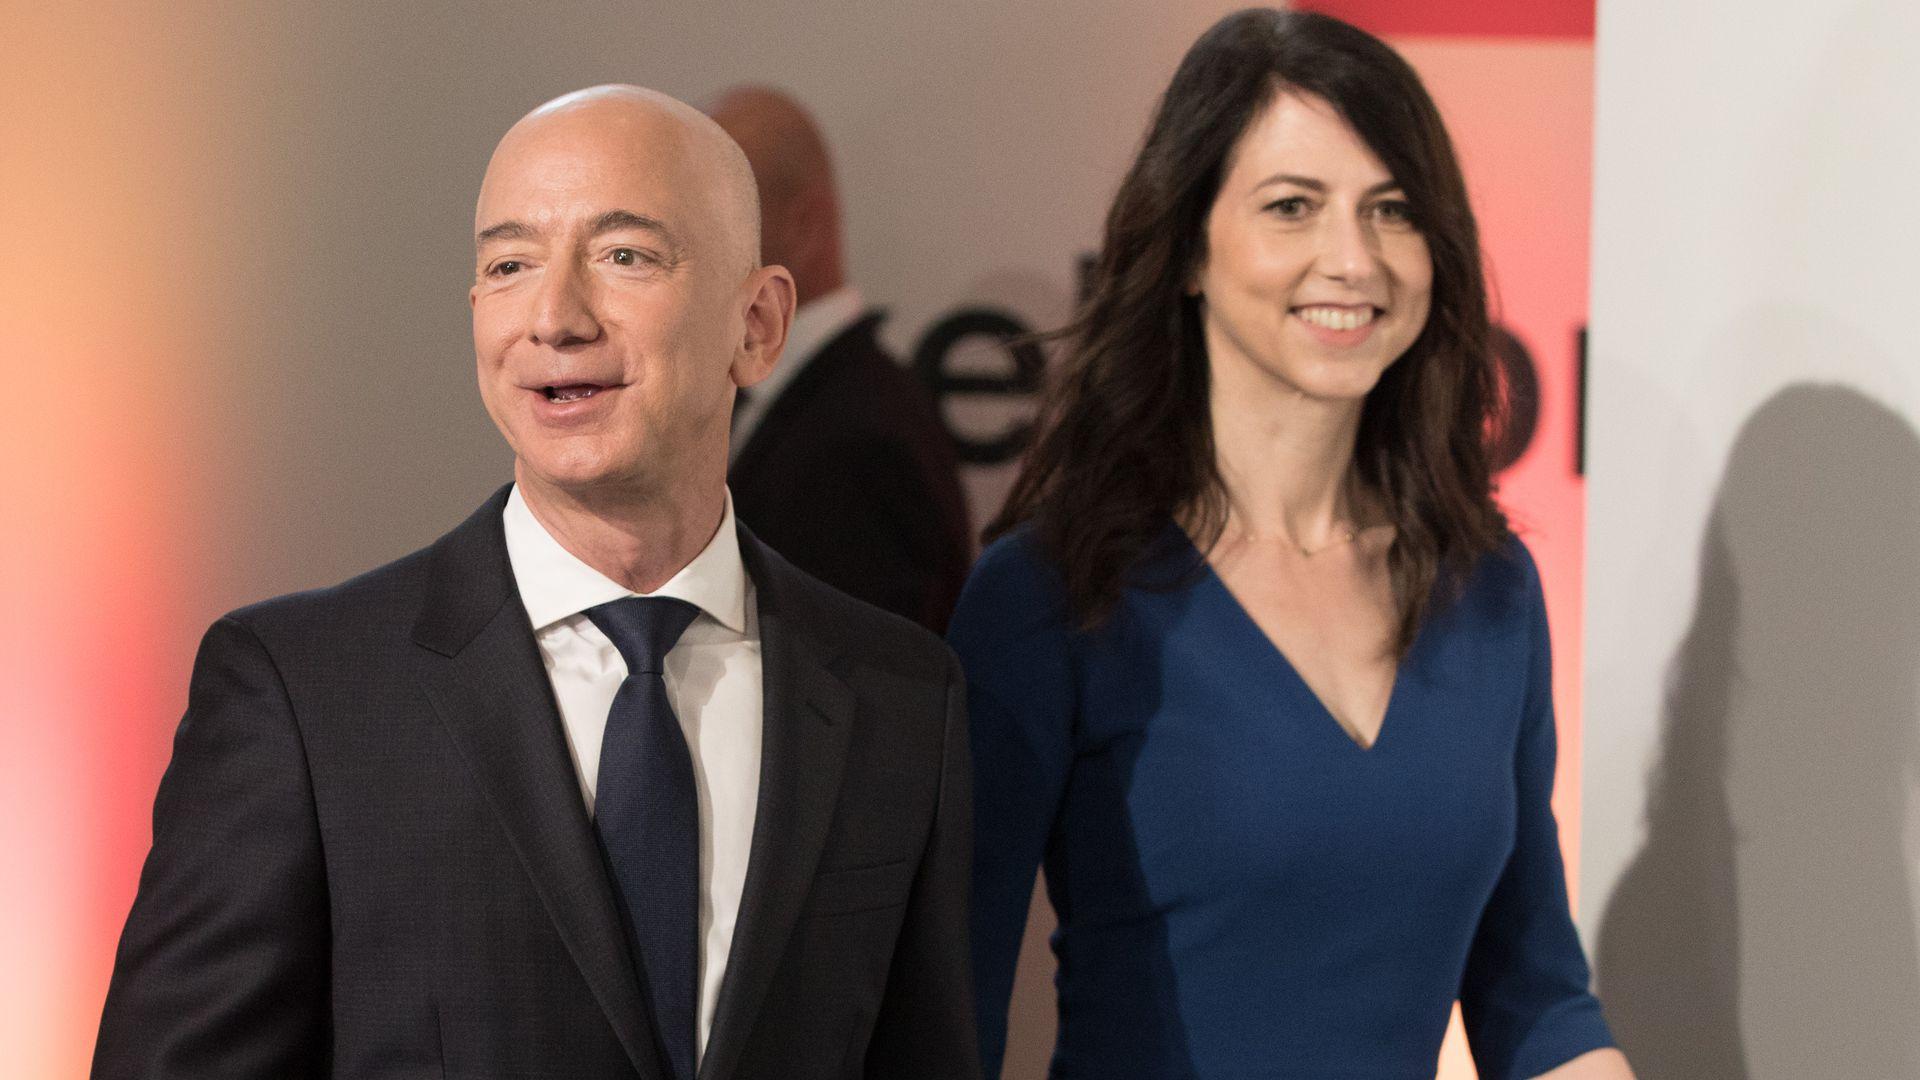 Jeff Bezos contributes $10 million to bipartisan PAC that helps